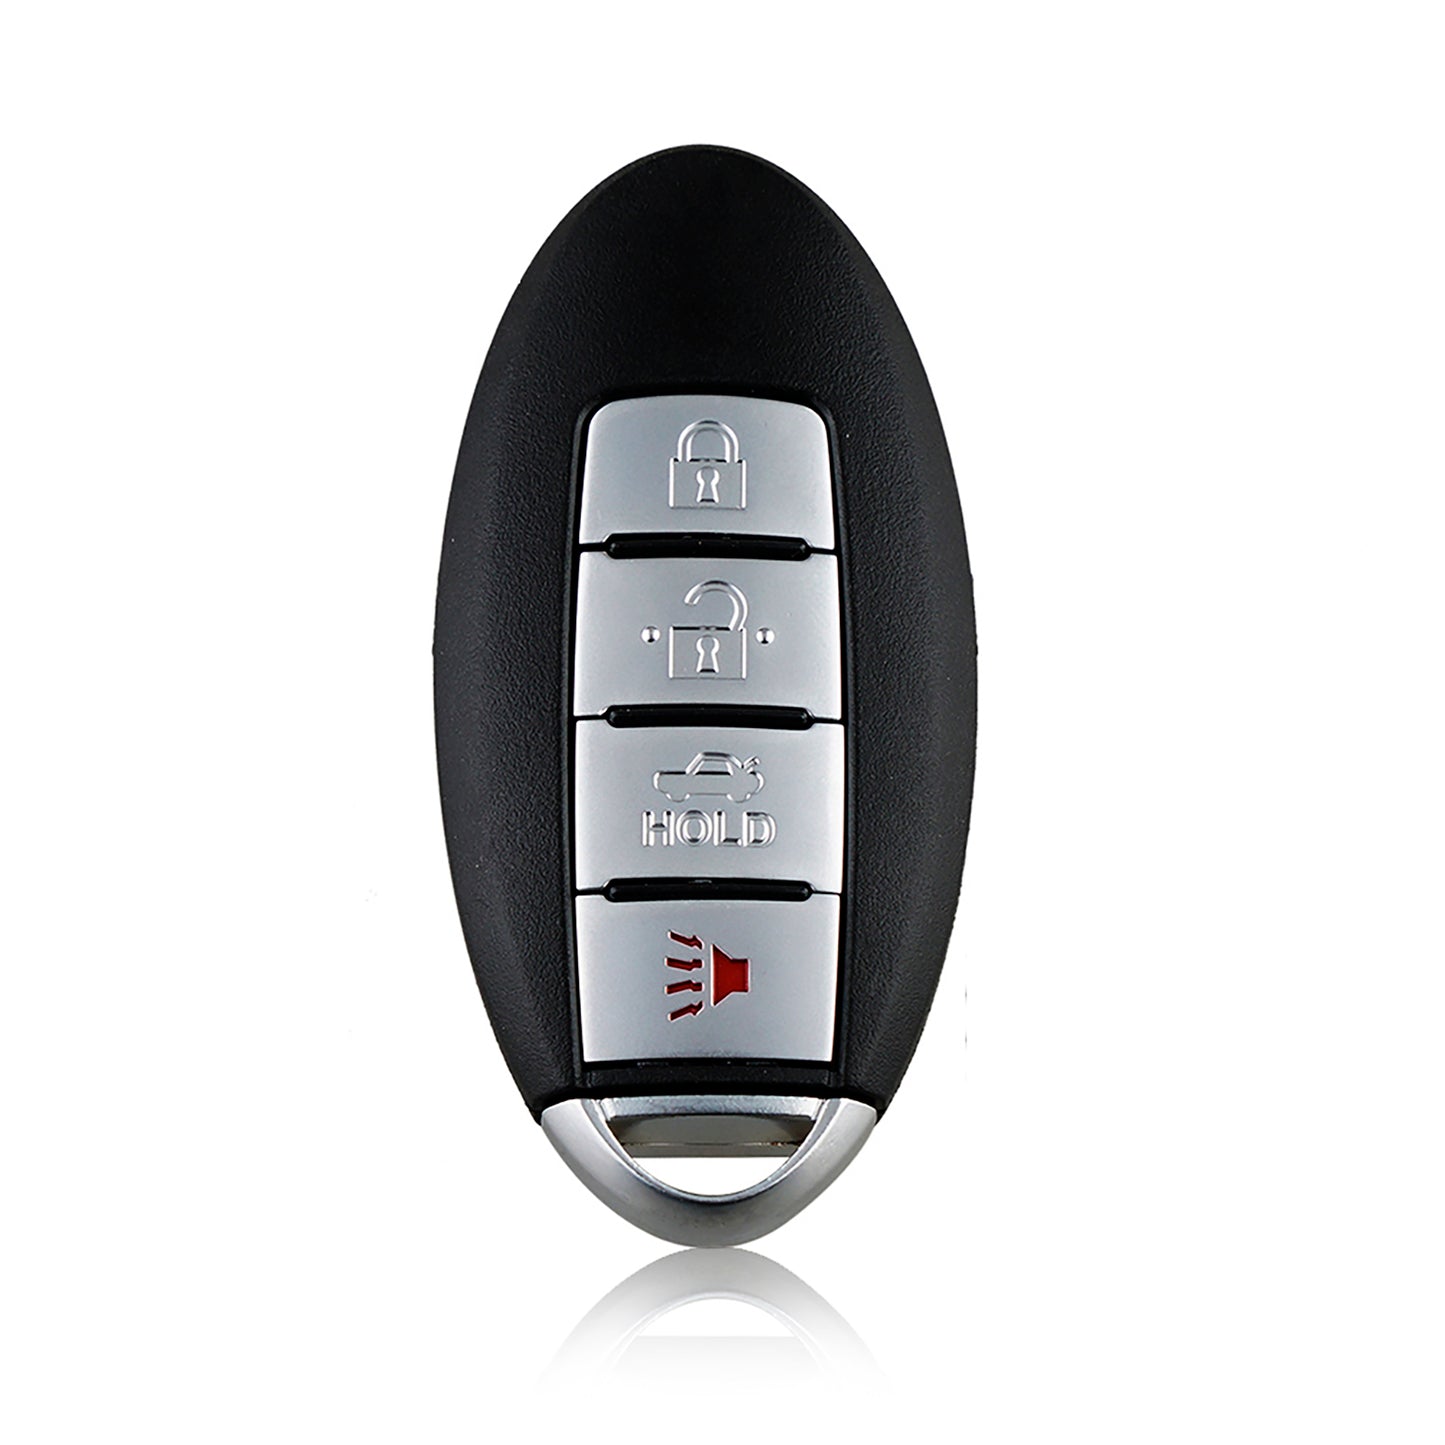 4 Buttons 315MHz Keyless Entry Proximity Remote Smart Fob Car Key For 2002-2015 Infiniti EX35 FX35 FX45 G35 I35 Q45 QX56 Nissan 350Z Altima Armada Maxima Quest Sentra  FCC ID :  KBRASTU15 SKU:J230